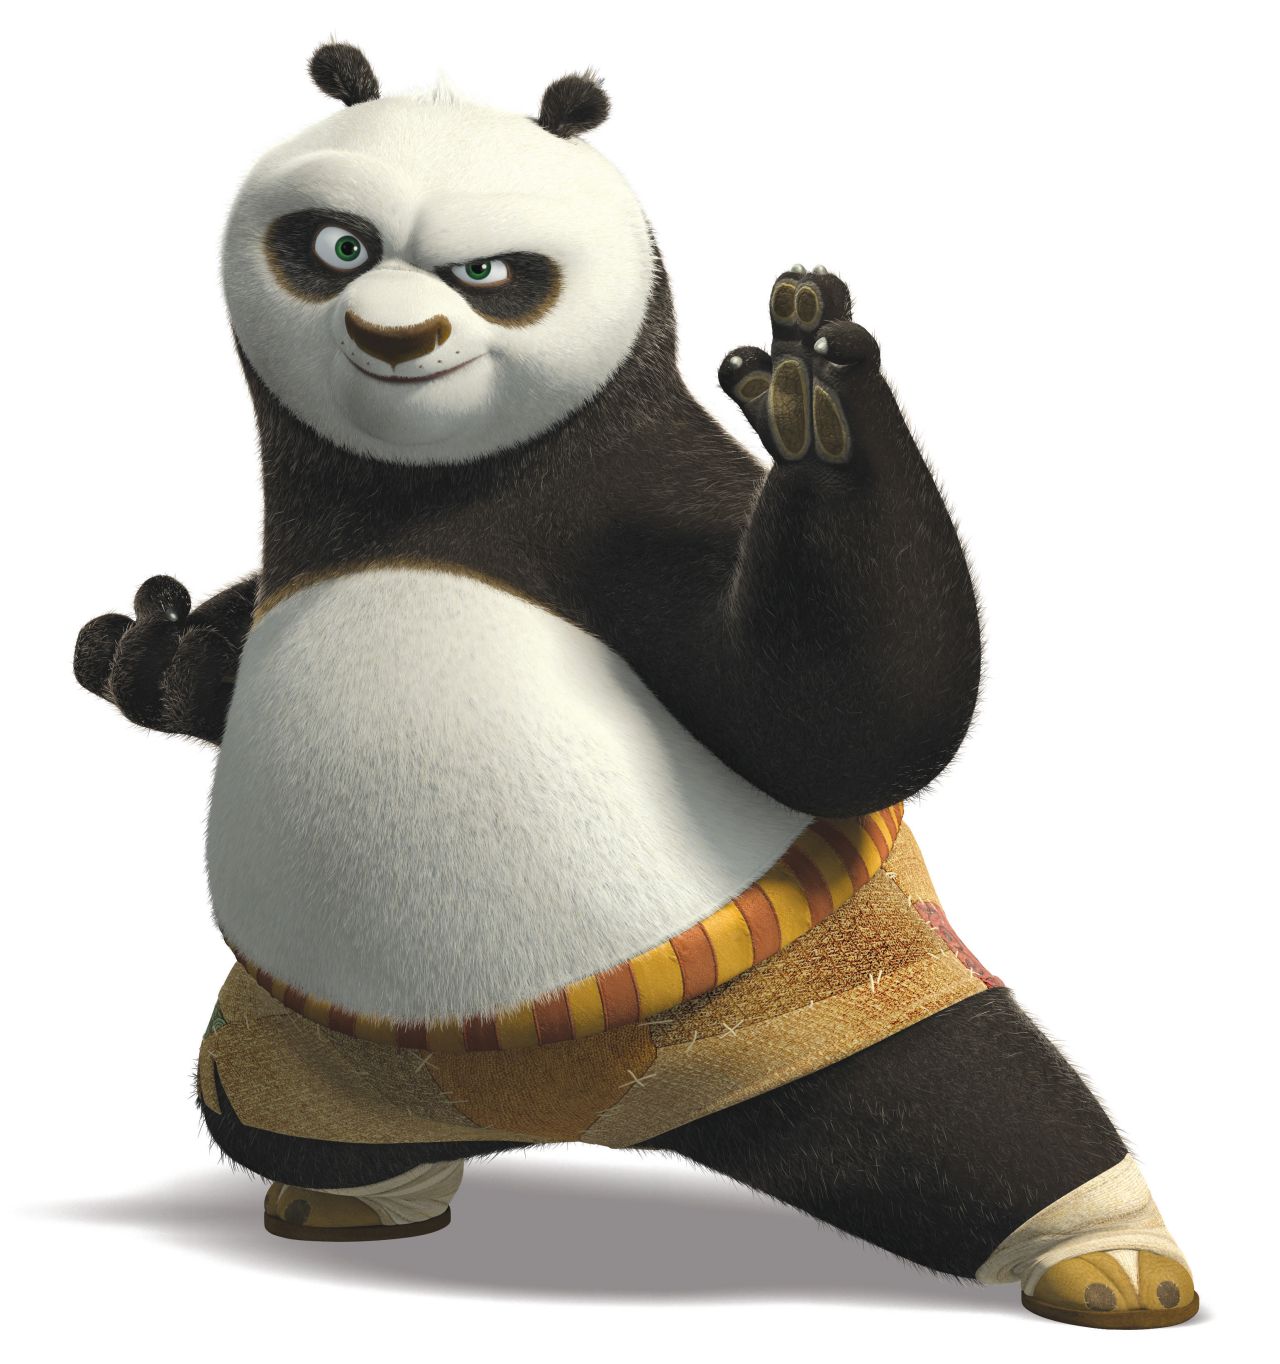 Prepare yourself for pure Panda-monium - Kung Fu Panda 3 